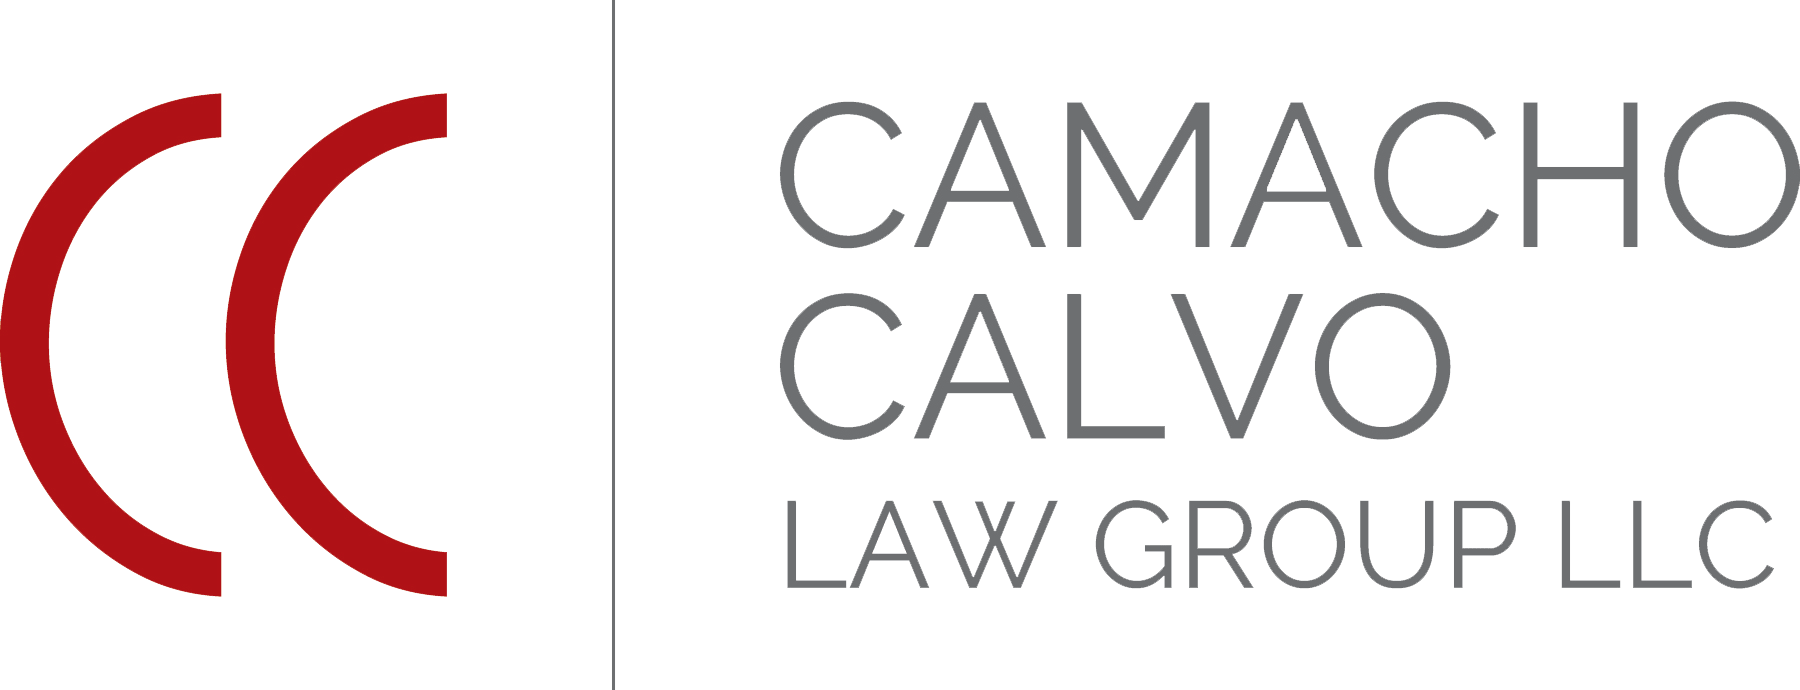 Camacho Calvo Law Group LLC